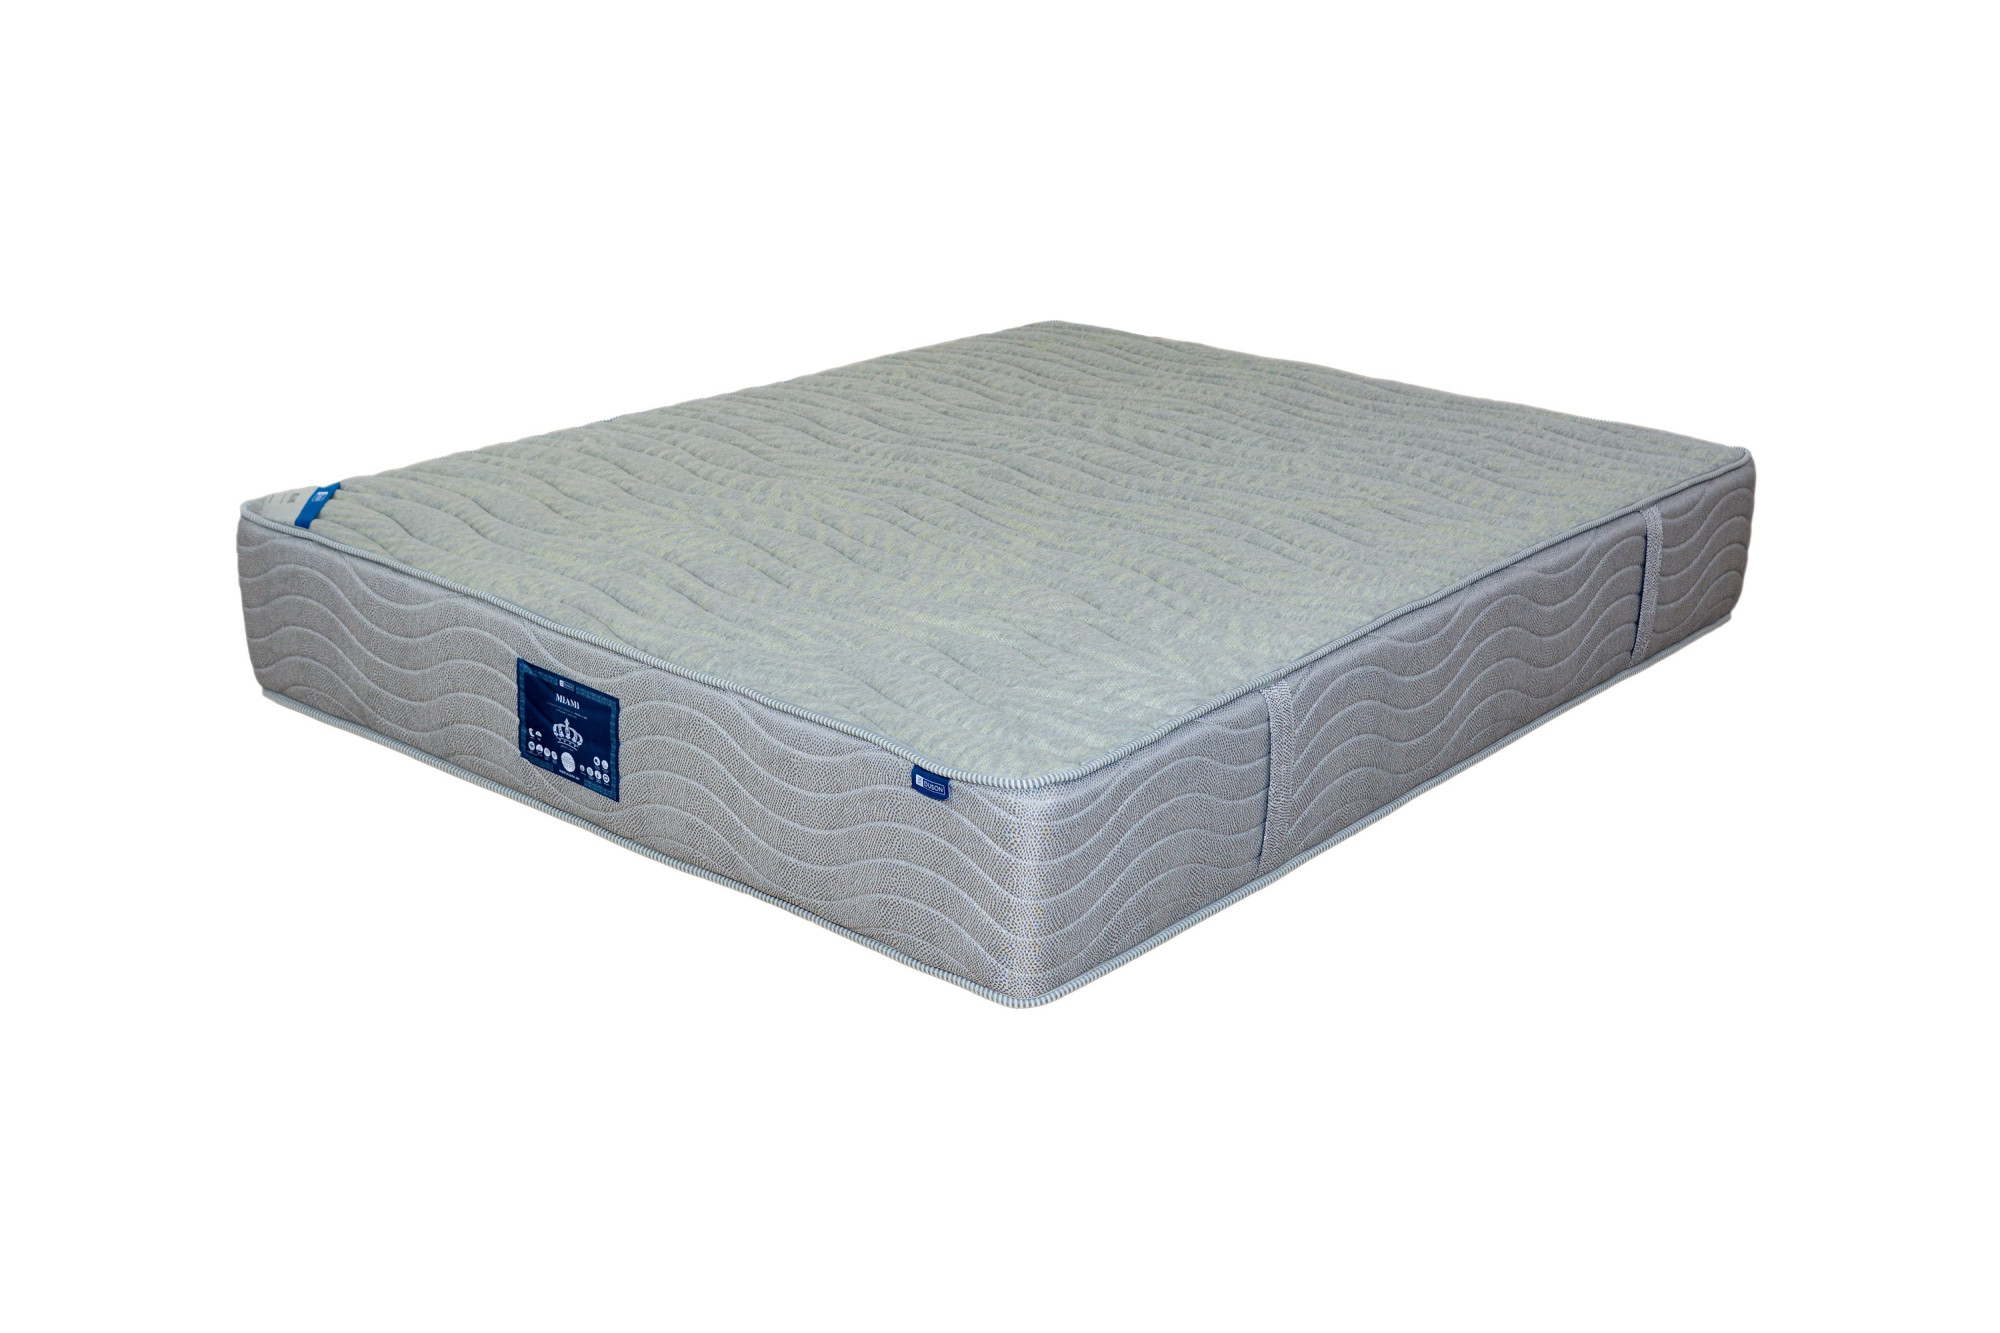 Orthopedic mattress Miami One-sided 130x200 hard, 25cm